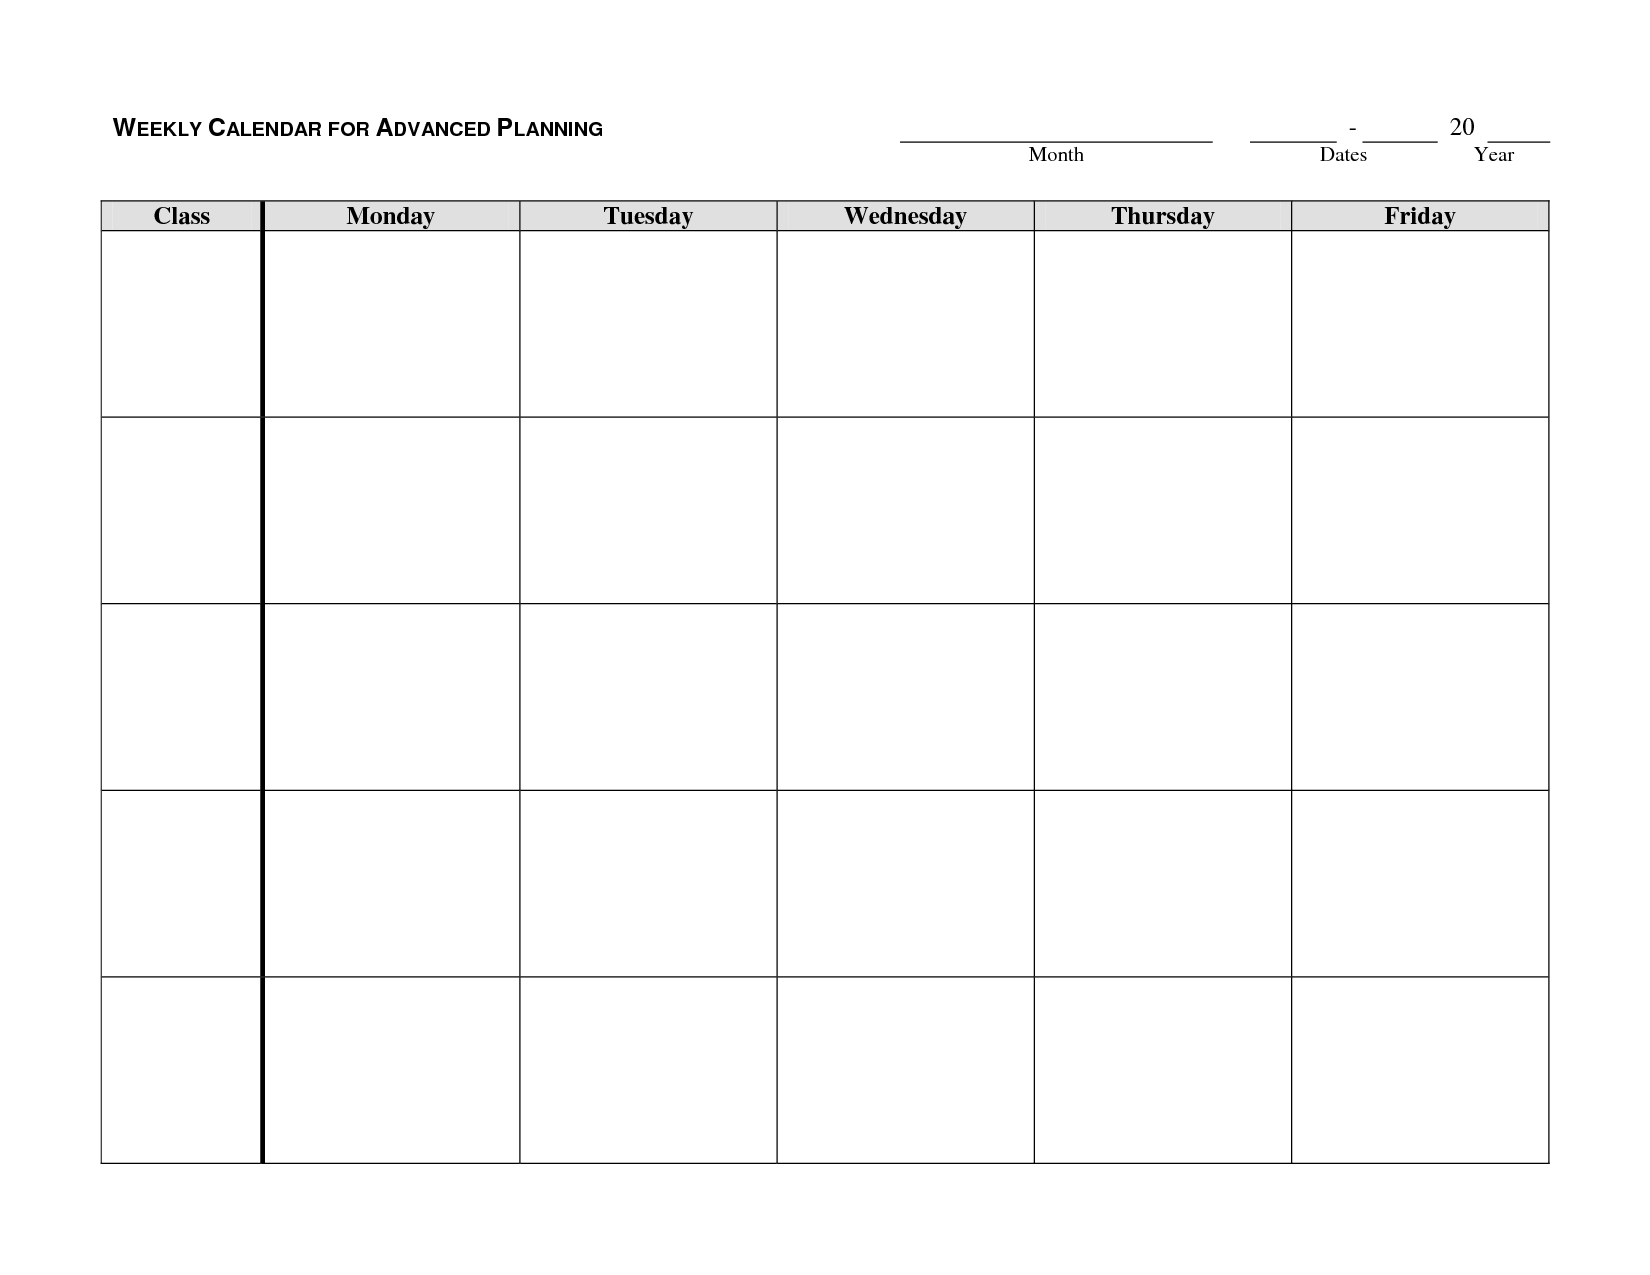 Blank Monday Through Friday Calendars | Calendar Template inside Printable Calendar Weekdays Only